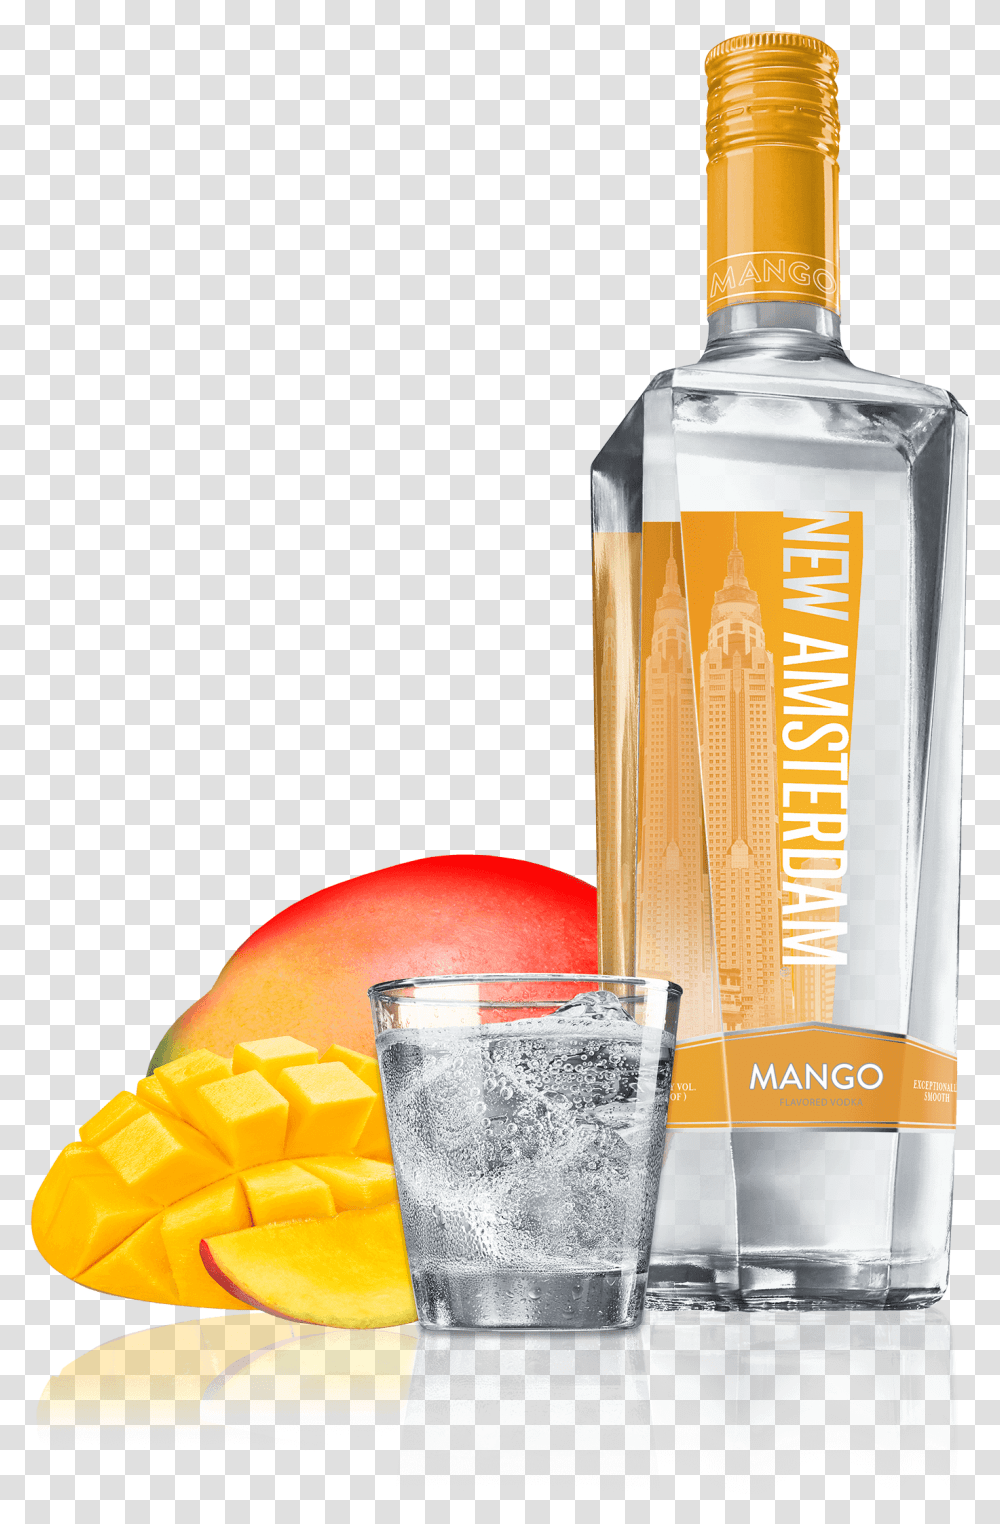 Mango Vodka New Amsterdam Vodka Coconut, Beverage, Drink, Liquor, Alcohol Transparent Png